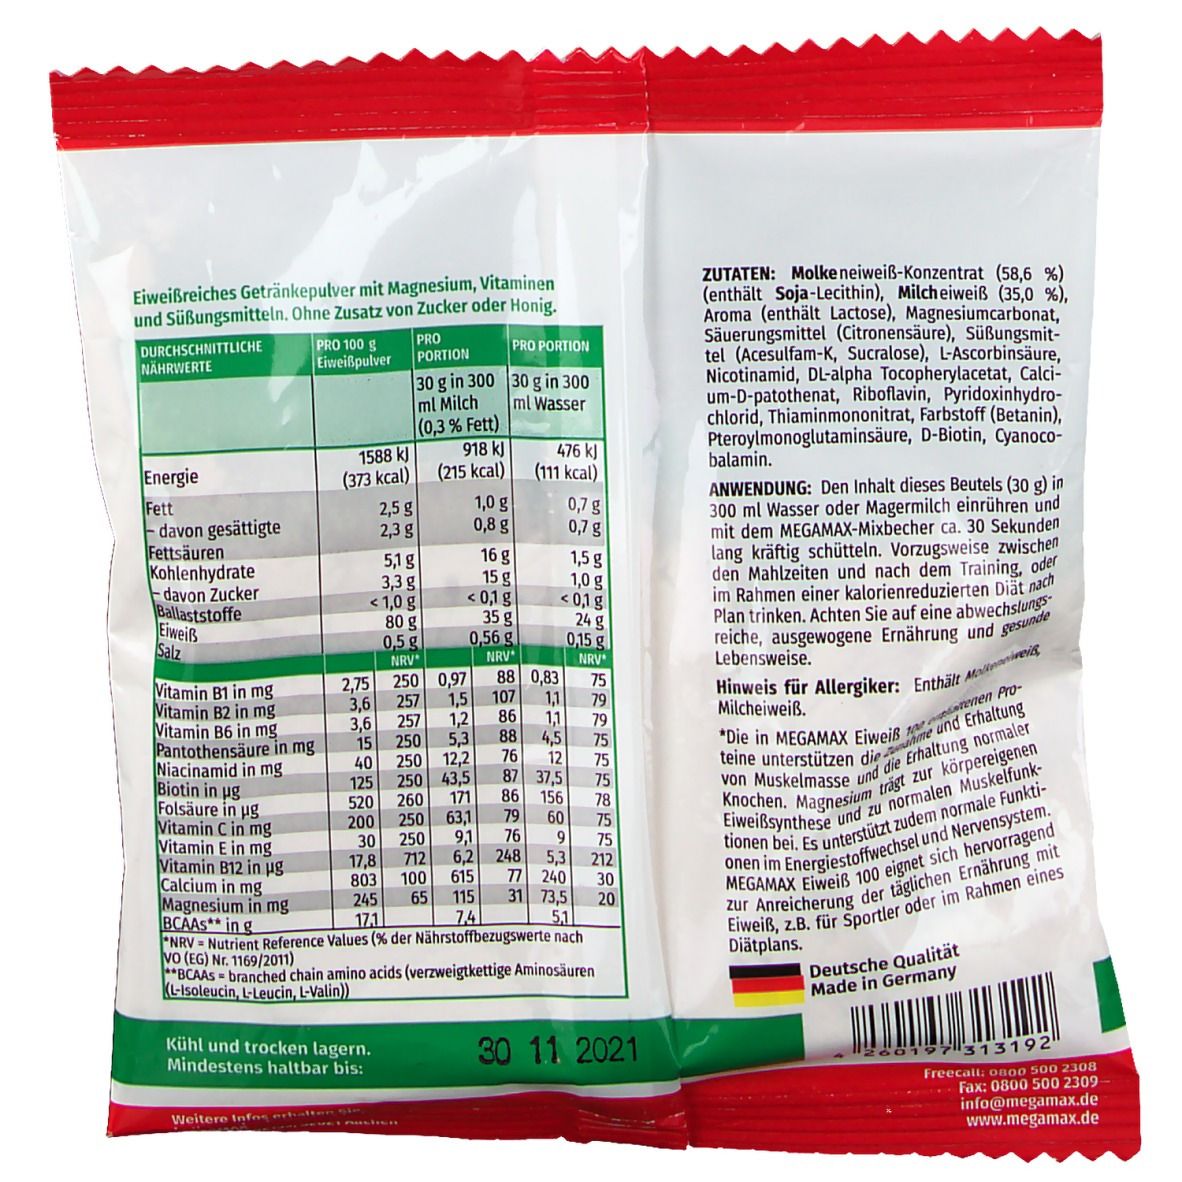 MEGAMAX® Nutrition Eiweiß 100 Himbeer-Geschmack